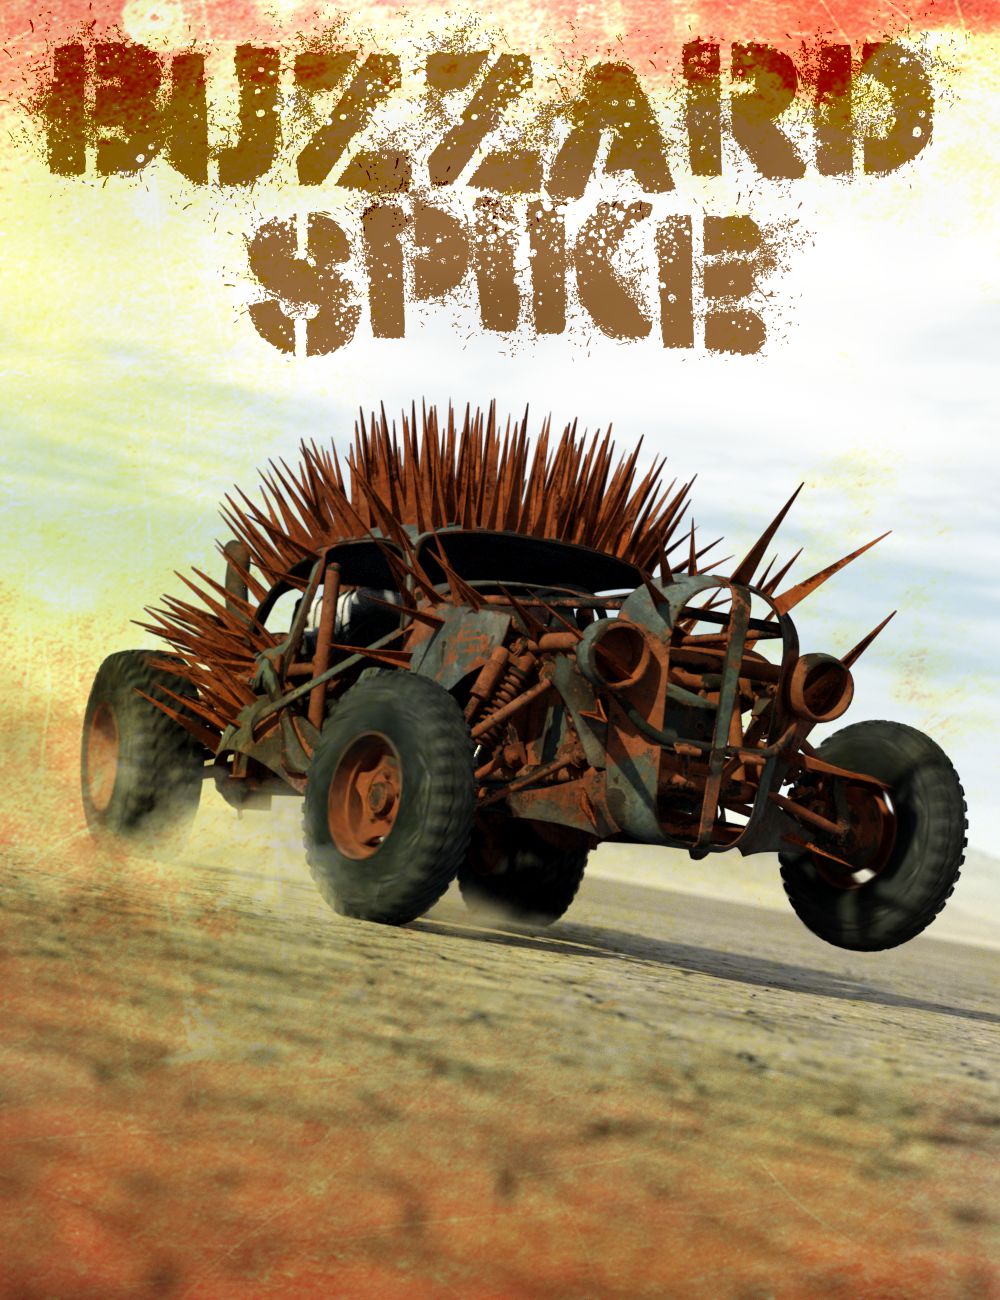 Buzzard Spike Vehicle by: DzFire, 3D Models by Daz 3D